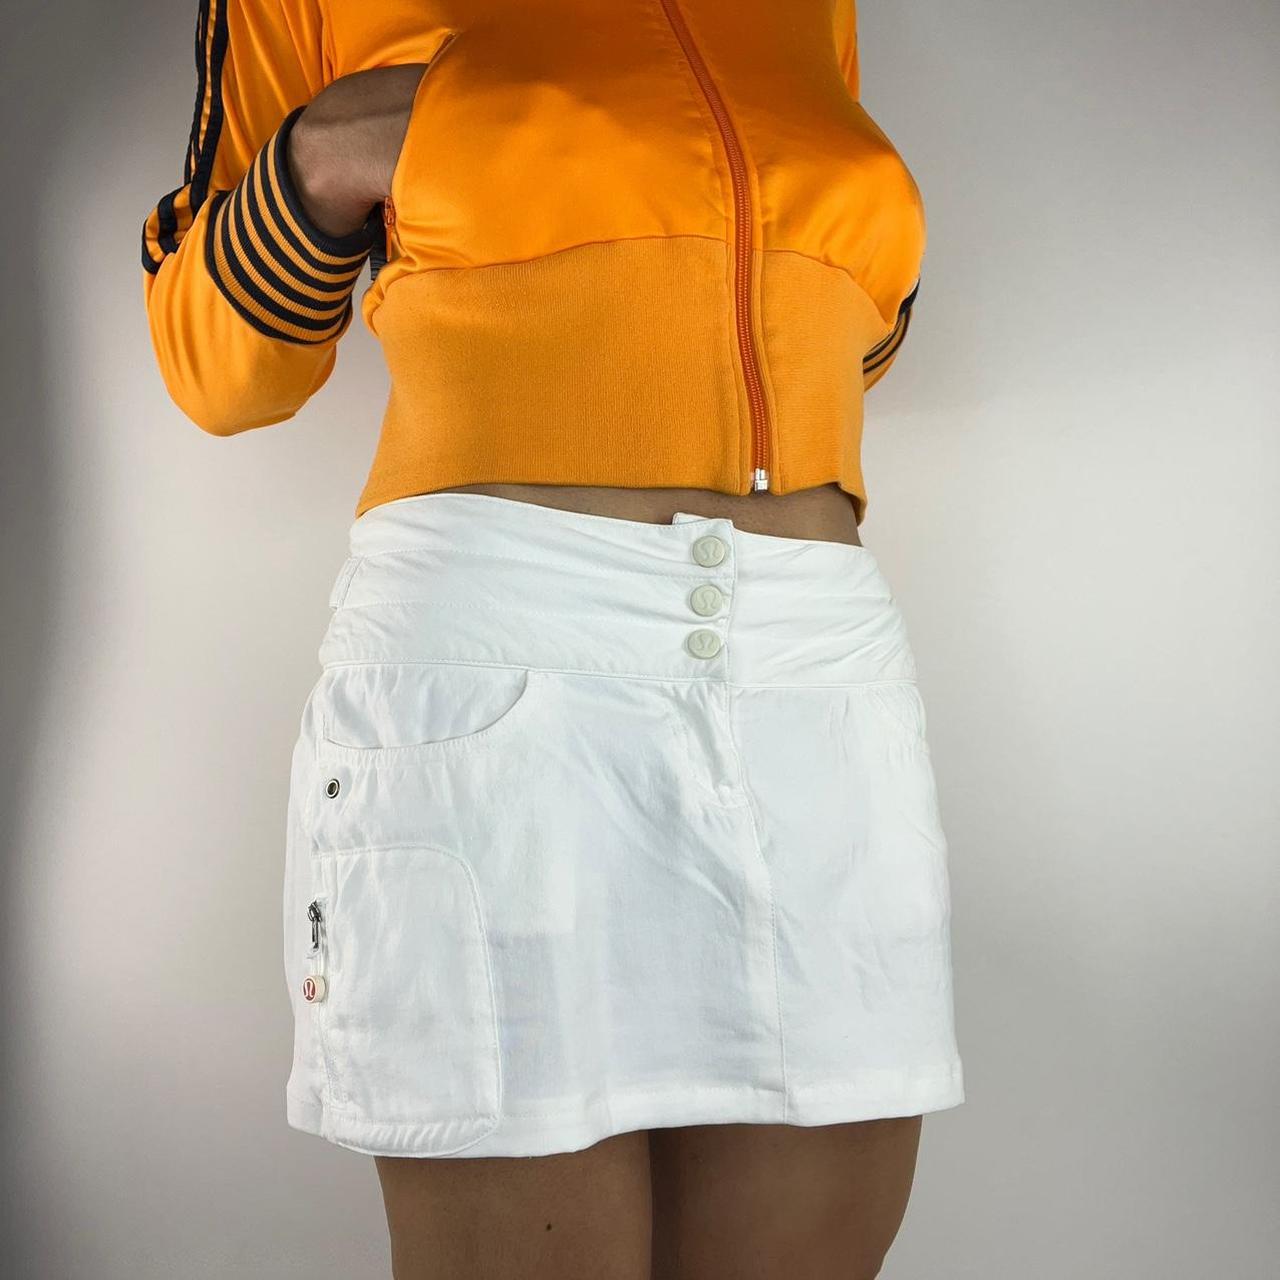 Early 2000s “Lululemon” nylon mini skirt with thick... - Depop